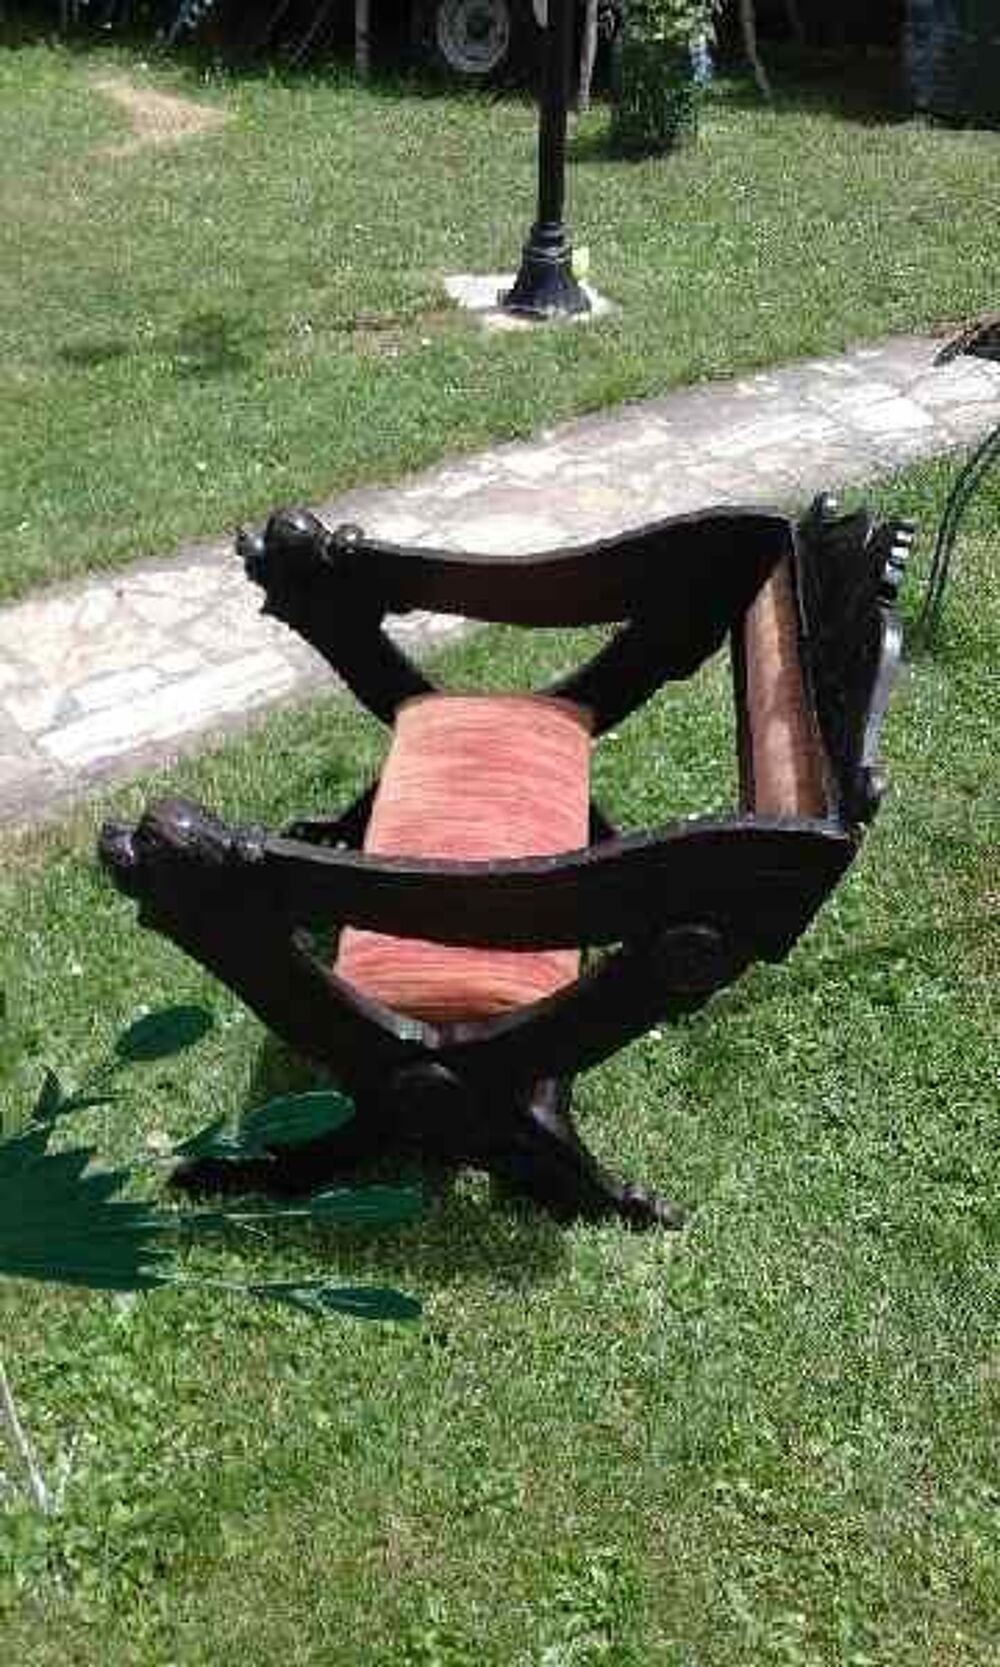 fauteuil bas en bois style Dagobert
Meubles